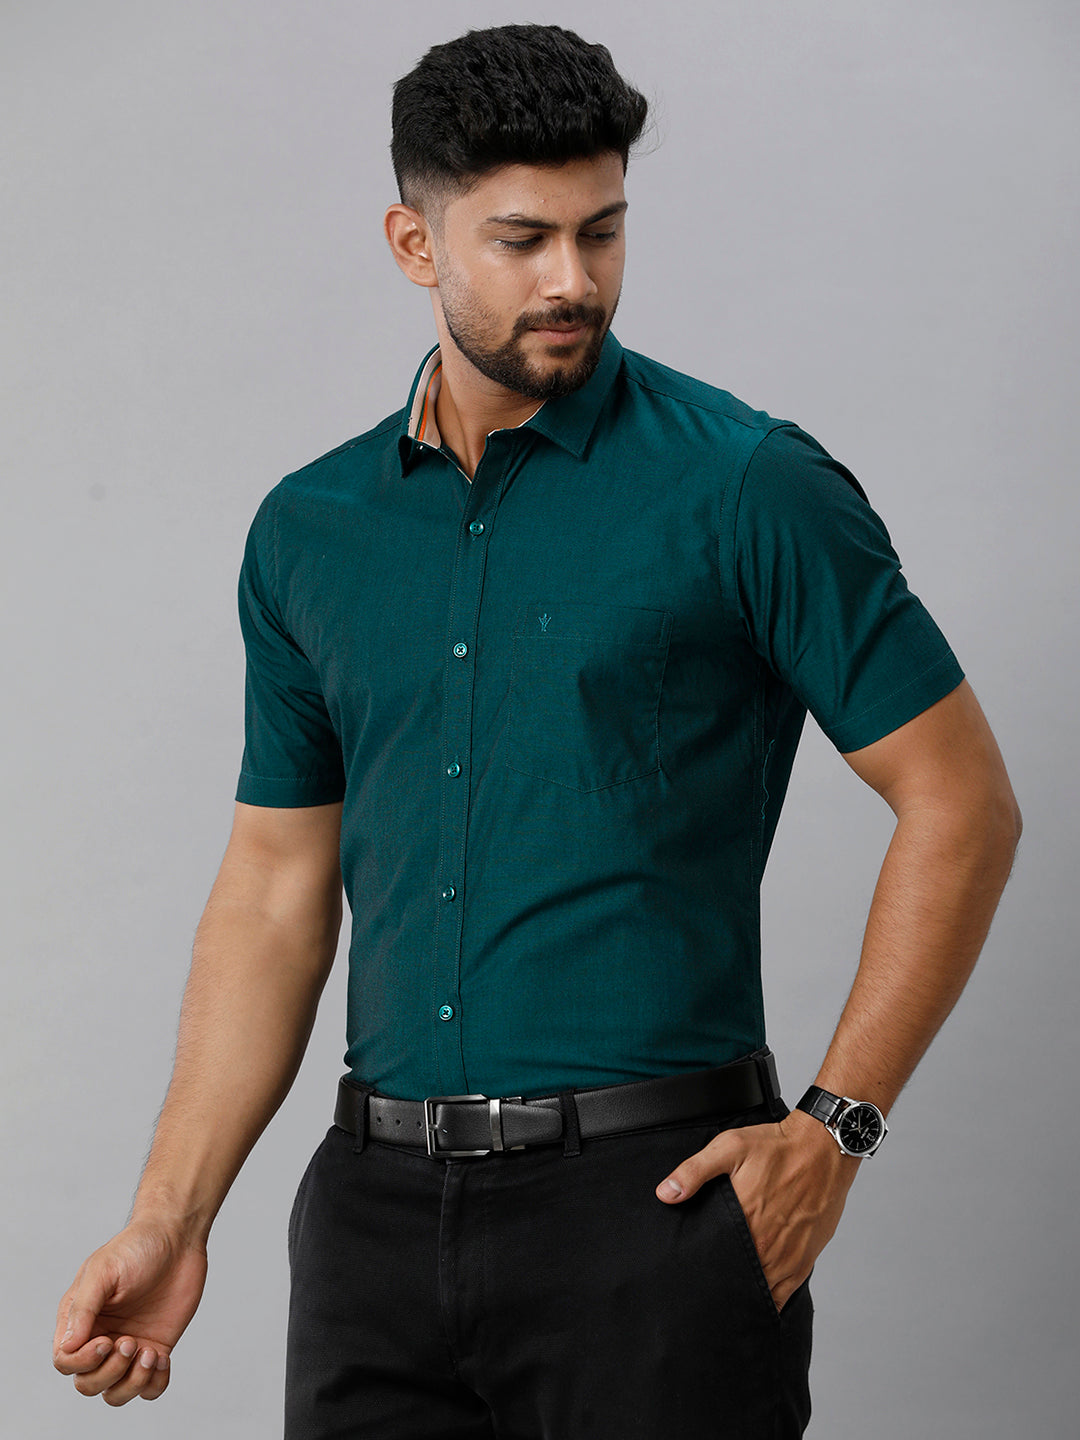 Mens Premium Cotton Formal Shirt Half Sleeves Dark Green MH G116-Side view